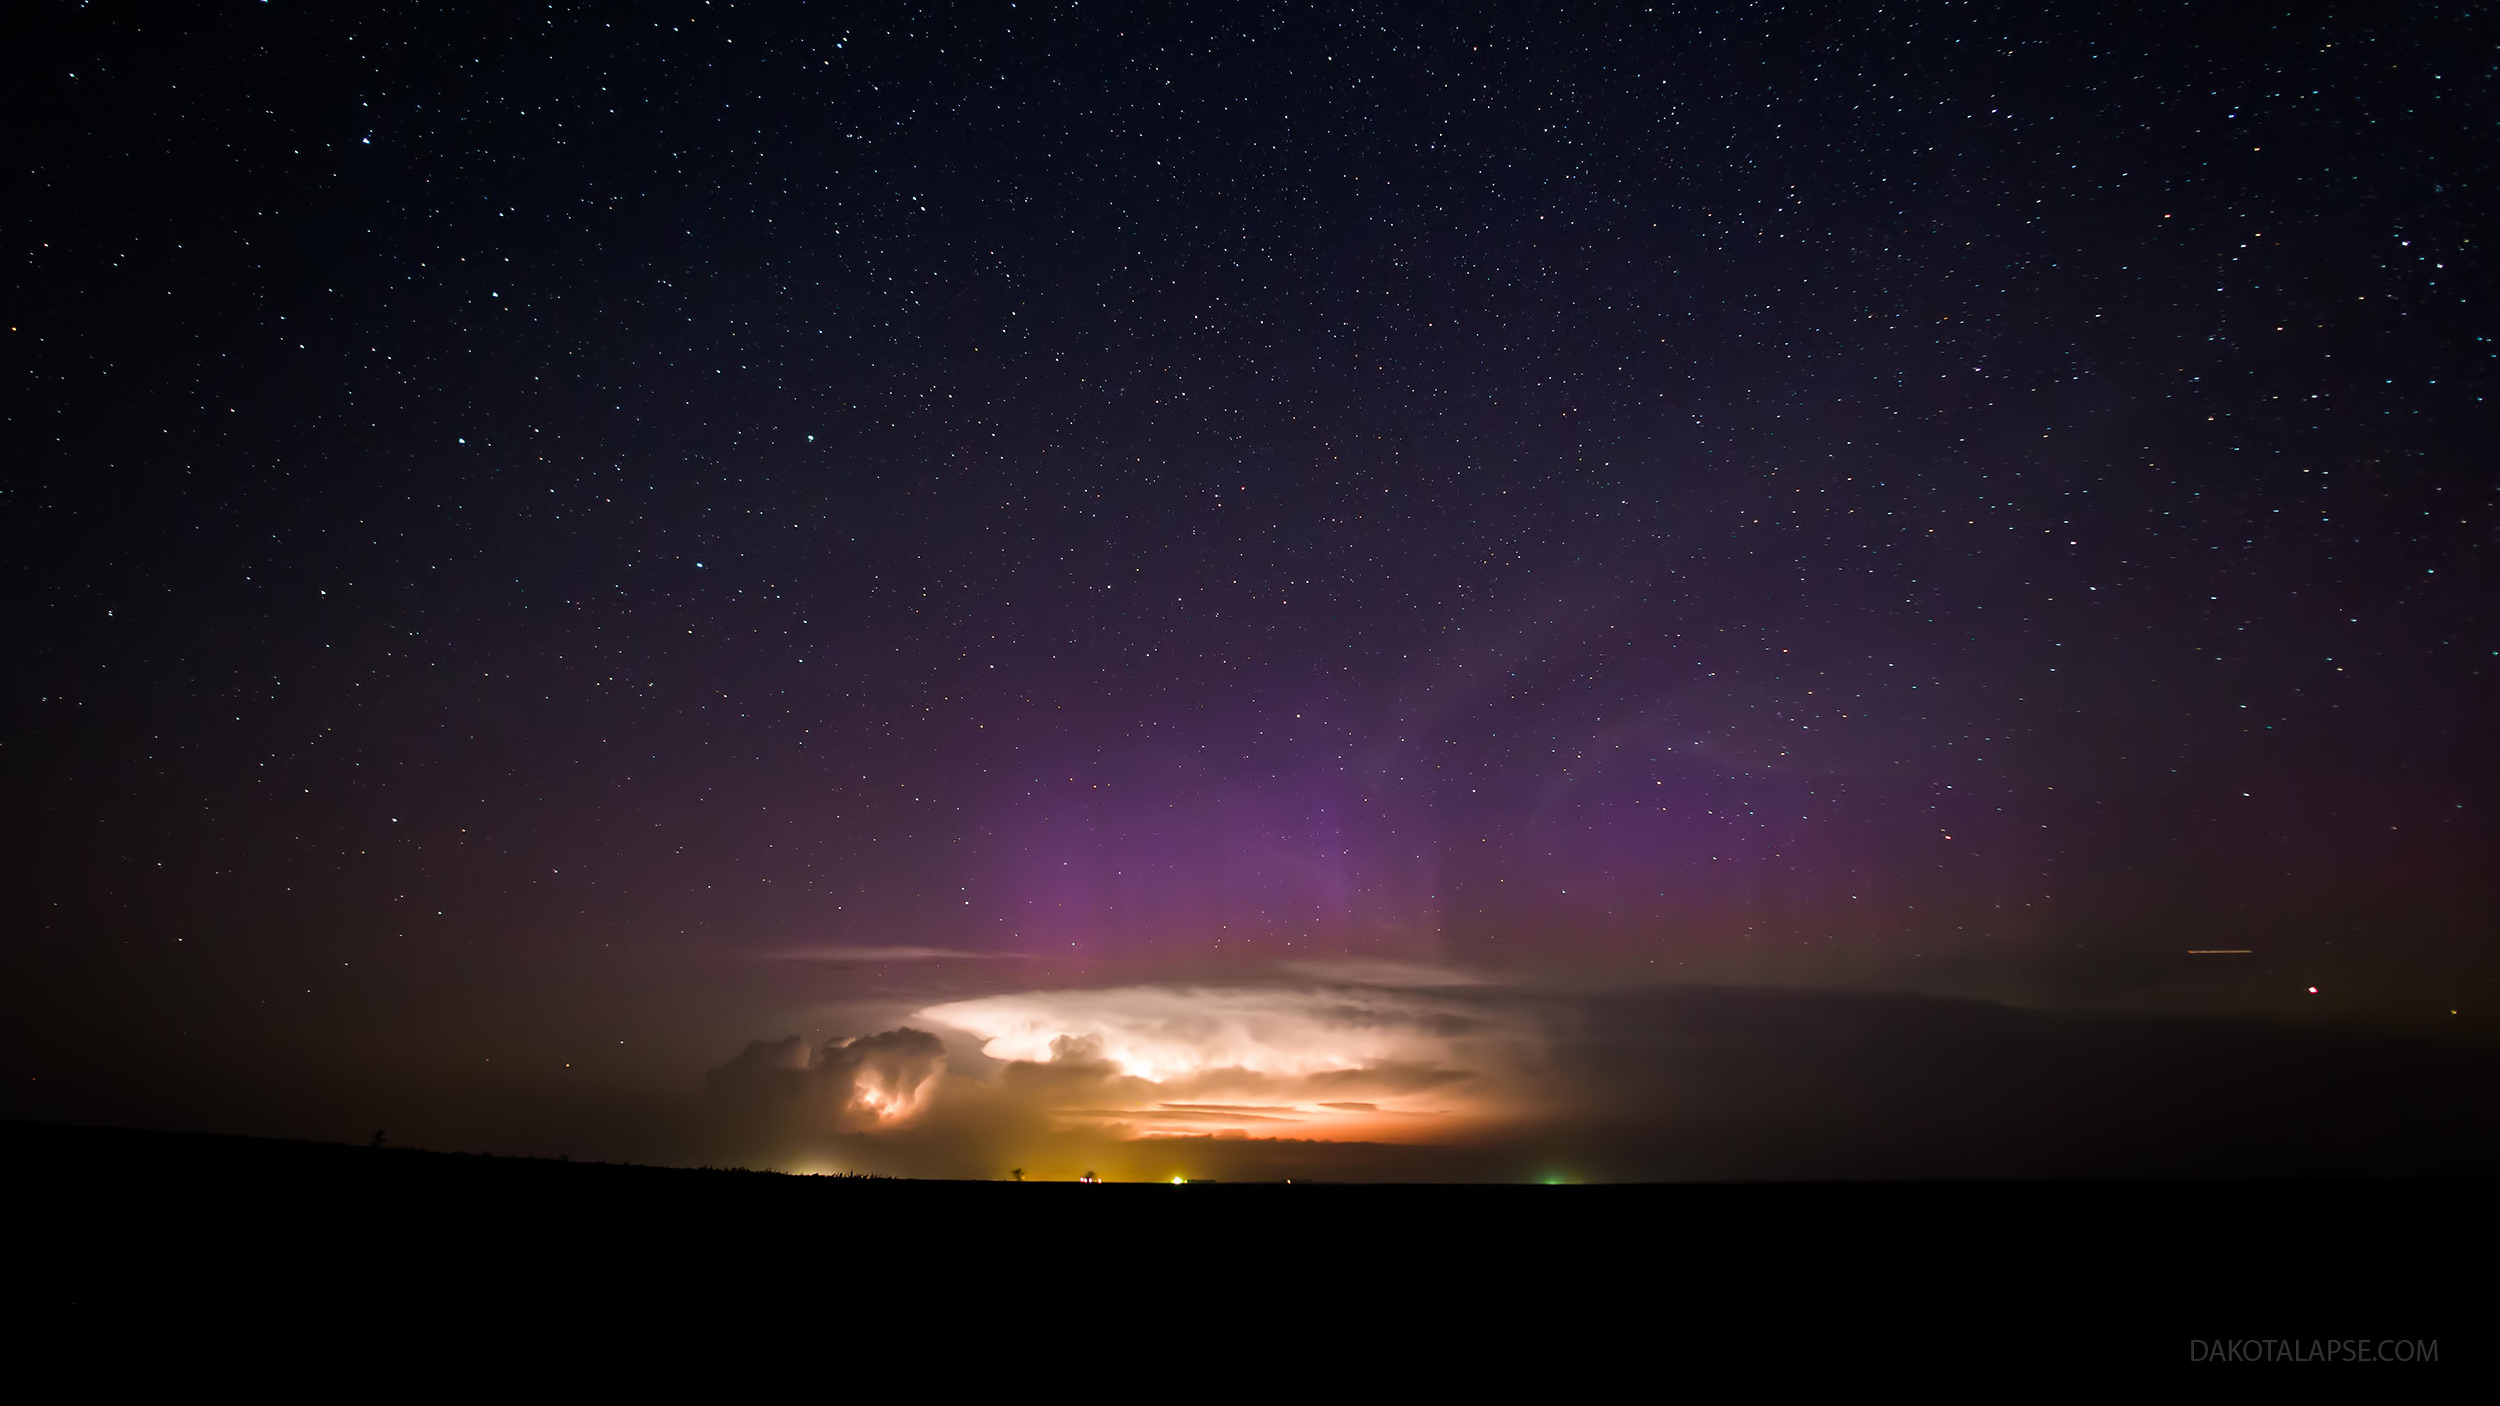 Simply Breathtaking Night Sky Timelapse: "Huelux" by Randy Halverson